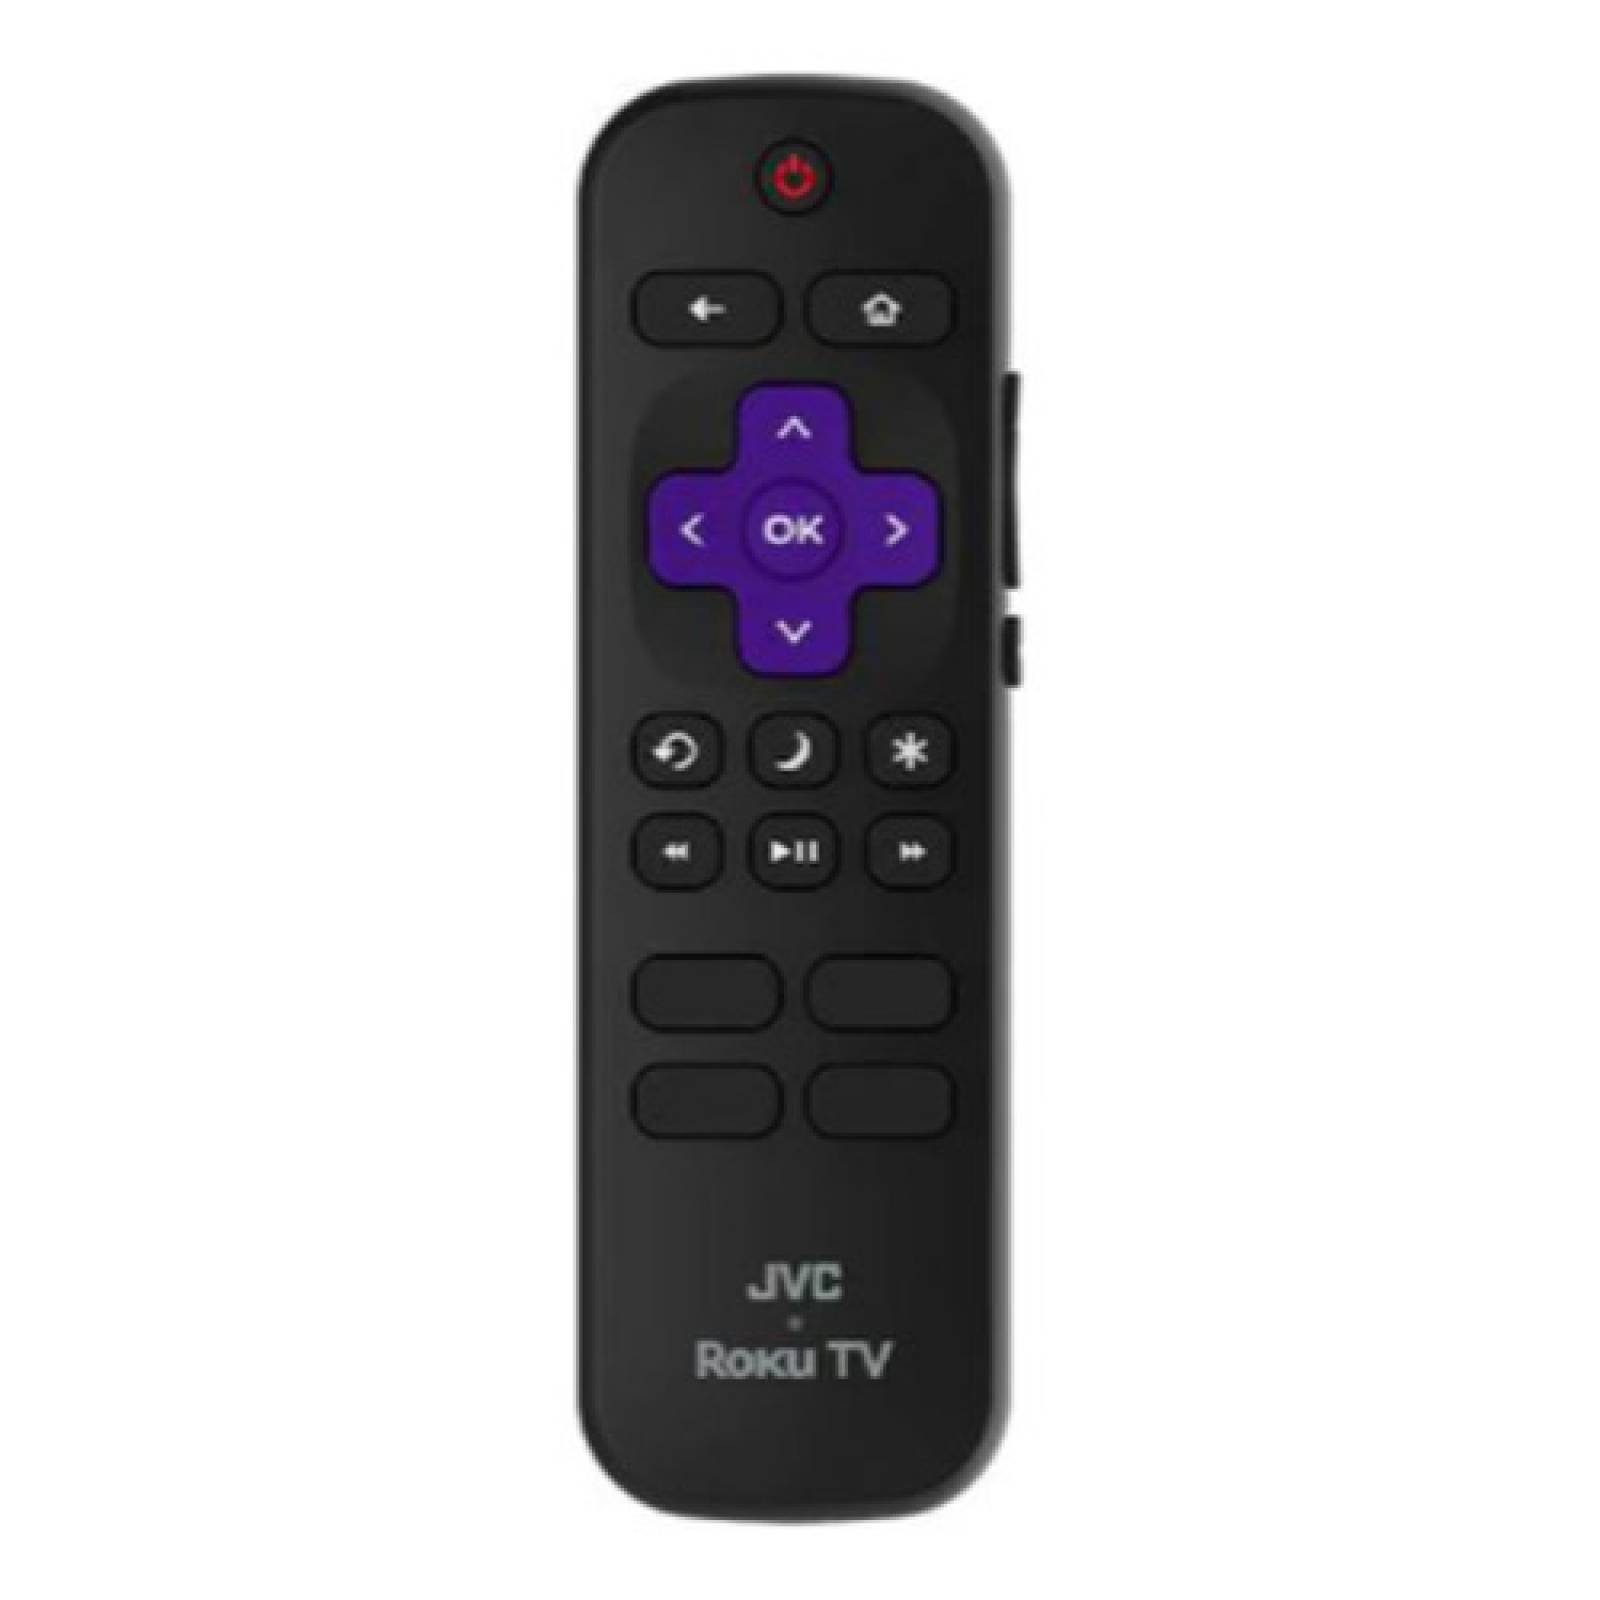 Pantalla JVC 24 Pulgadas HD Roku TV SI24R a precio de socio